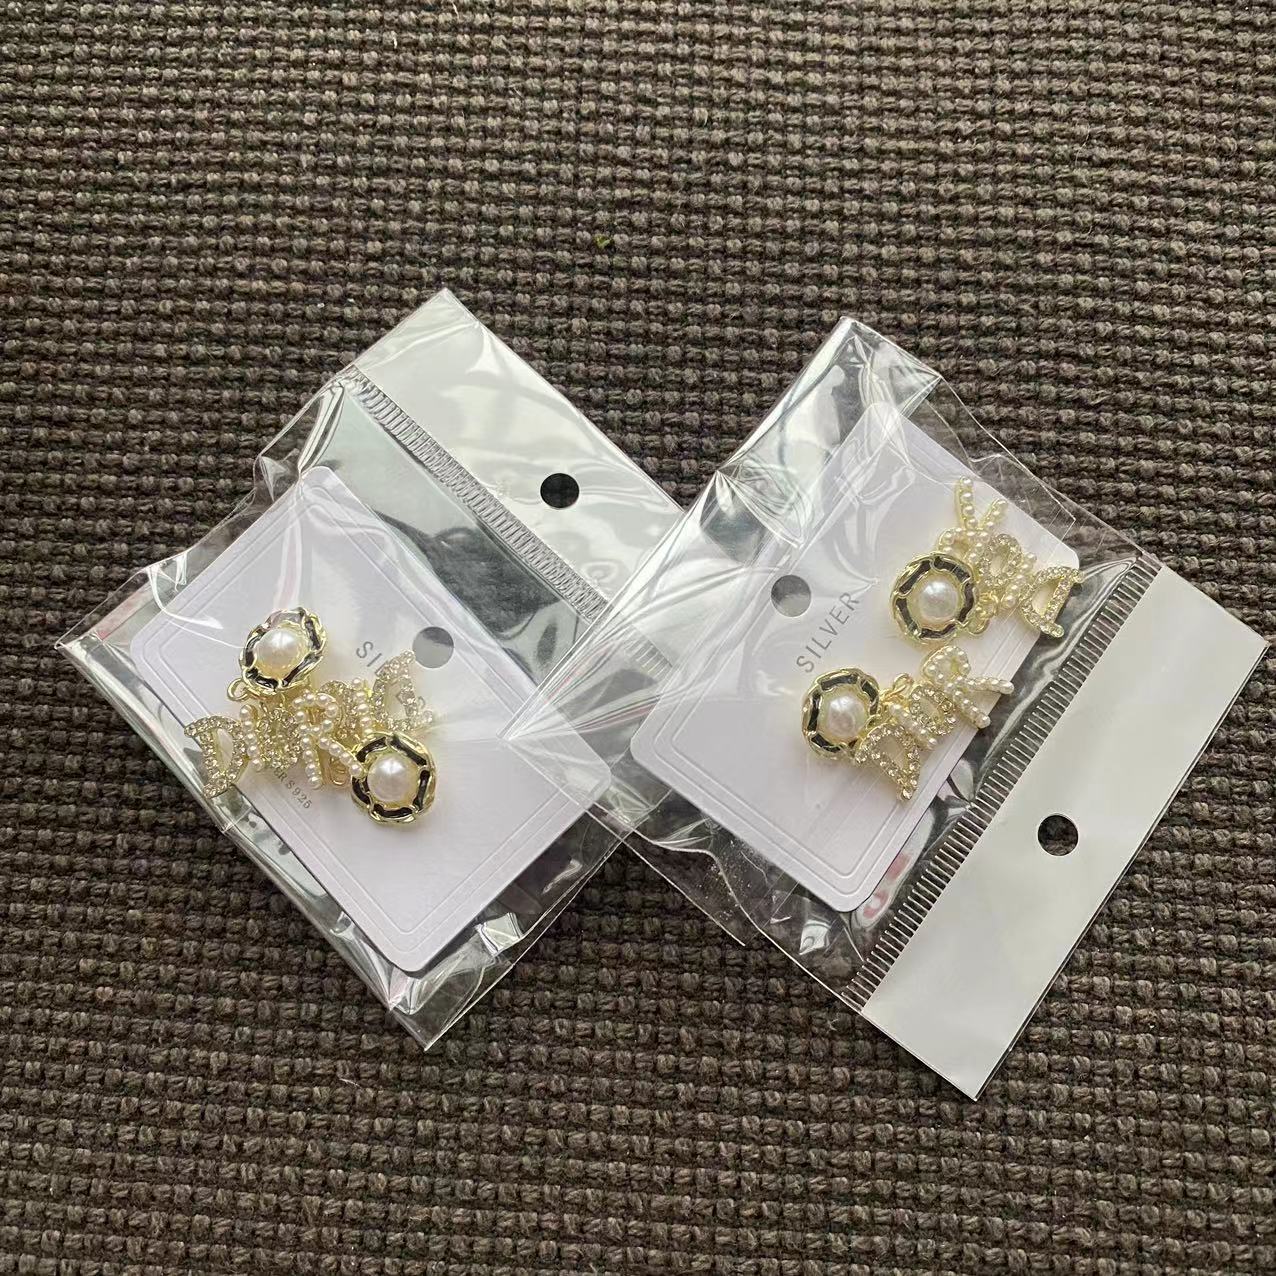 Special Sales! Dior earrings